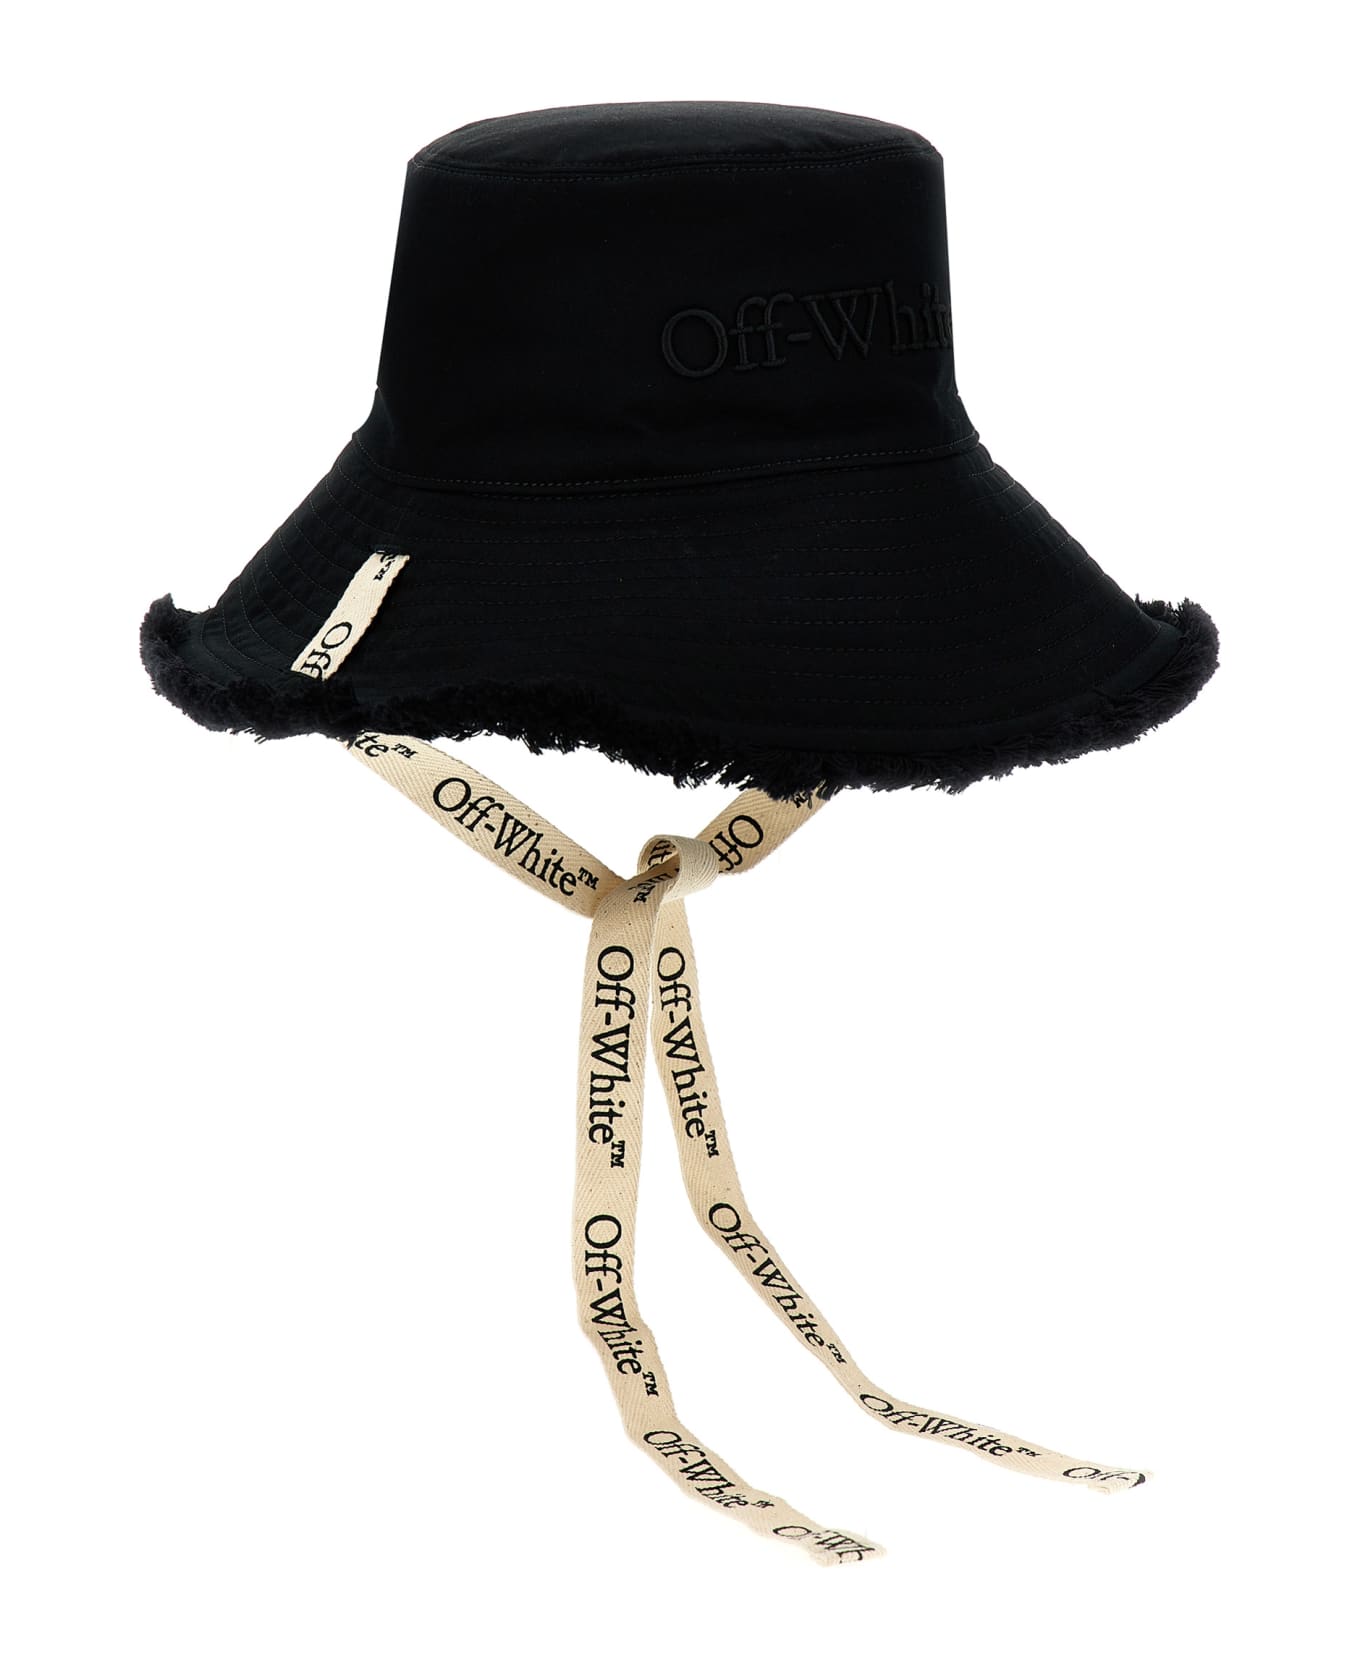 Off-White Bucket Hat - Black 帽子